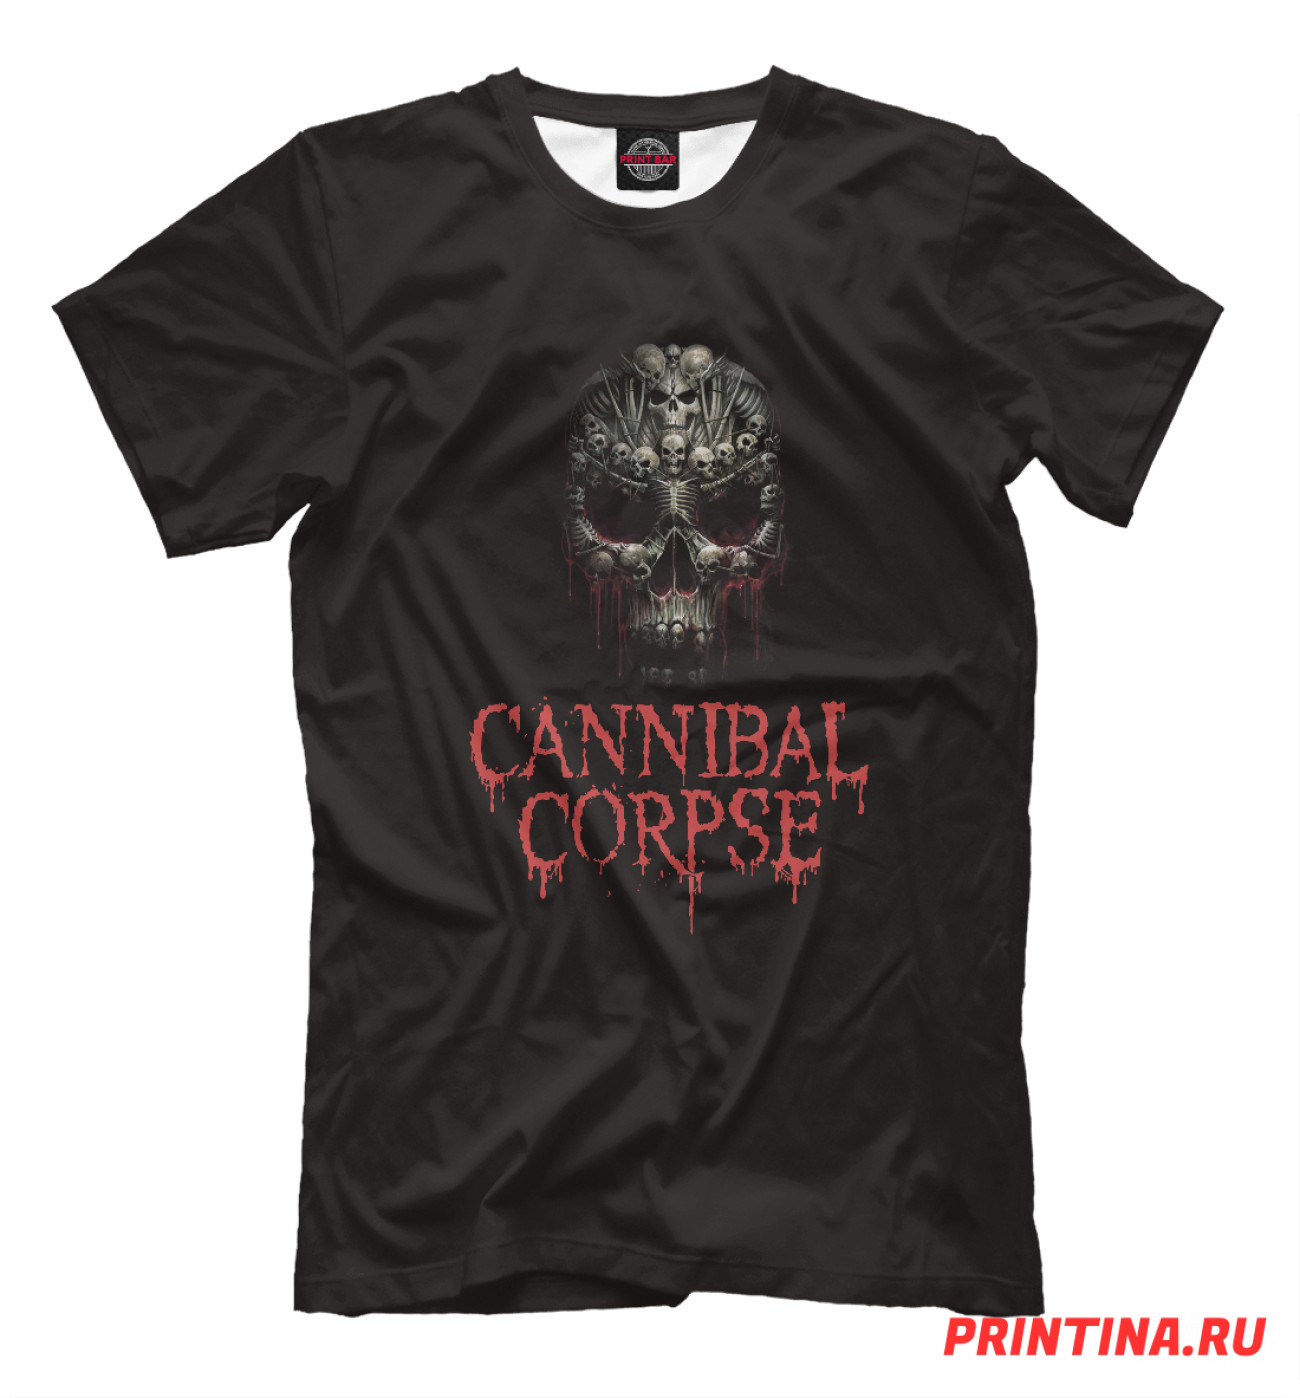 Мужская Футболка Cannibal Corpse, артикул: CCR-397753-fut-2